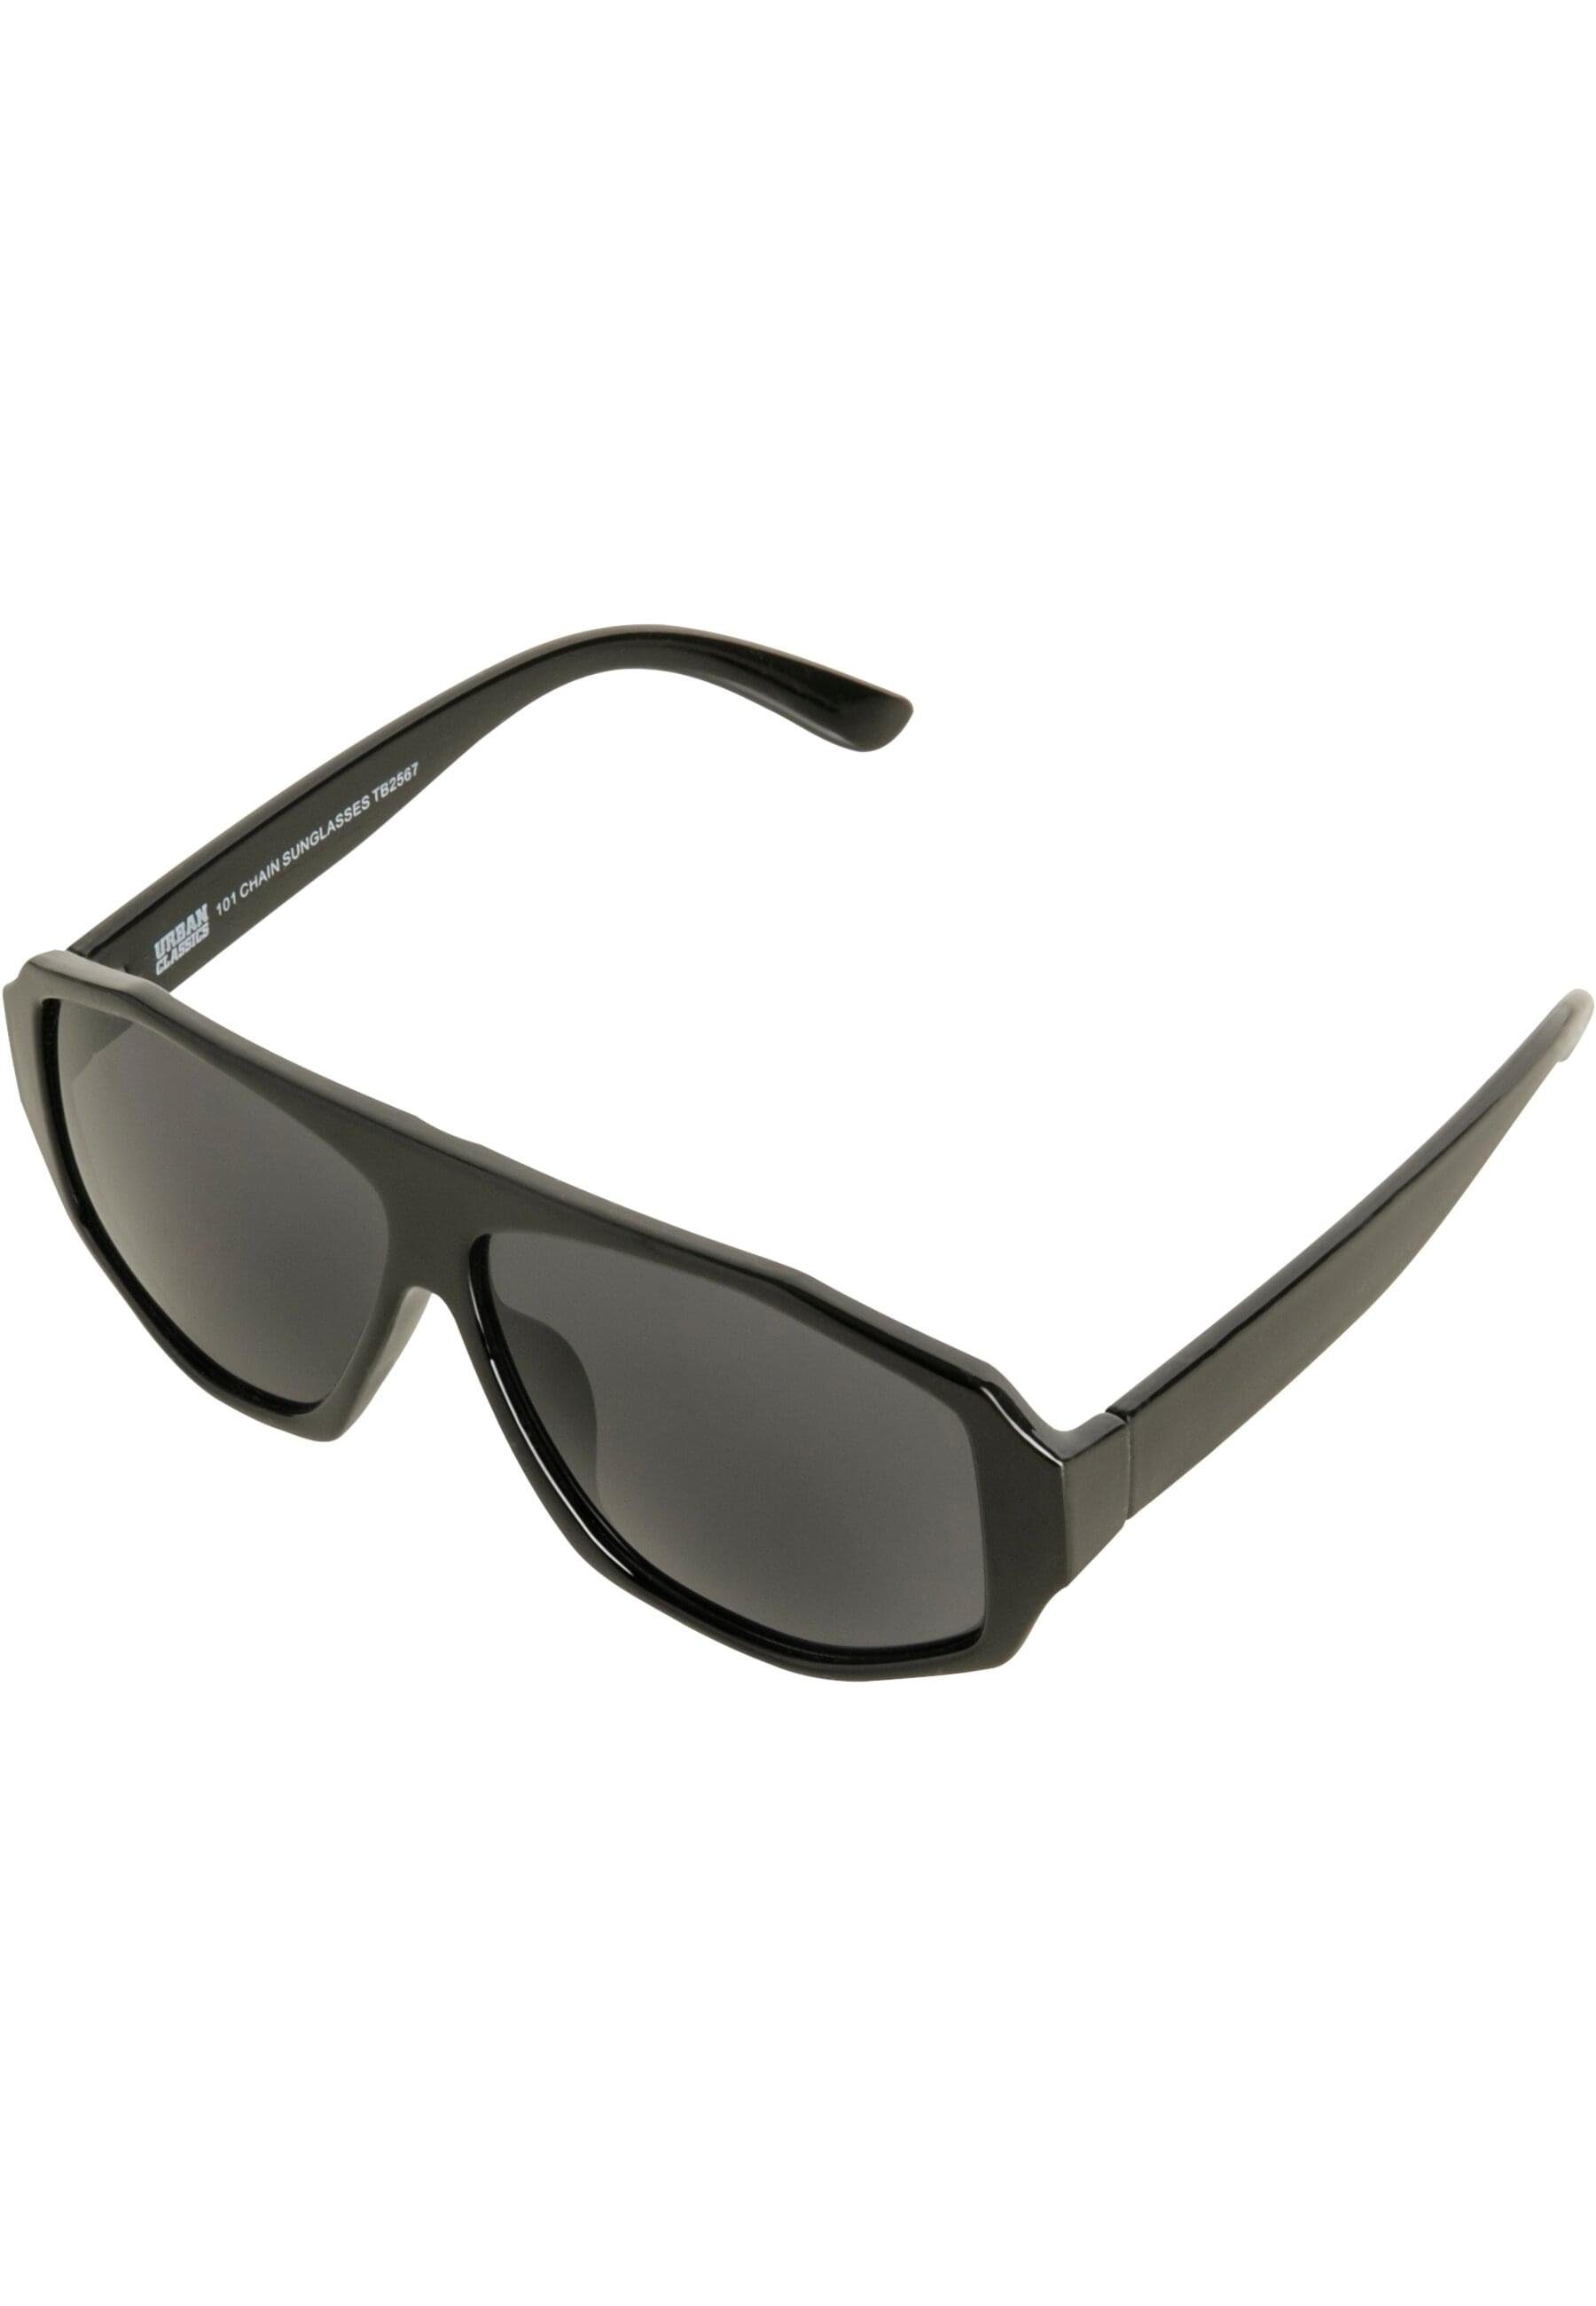 CLASSICS Chain Unisex Sunglasses TB2567 black/black URBAN 101 Chain Sonnenbrille 101